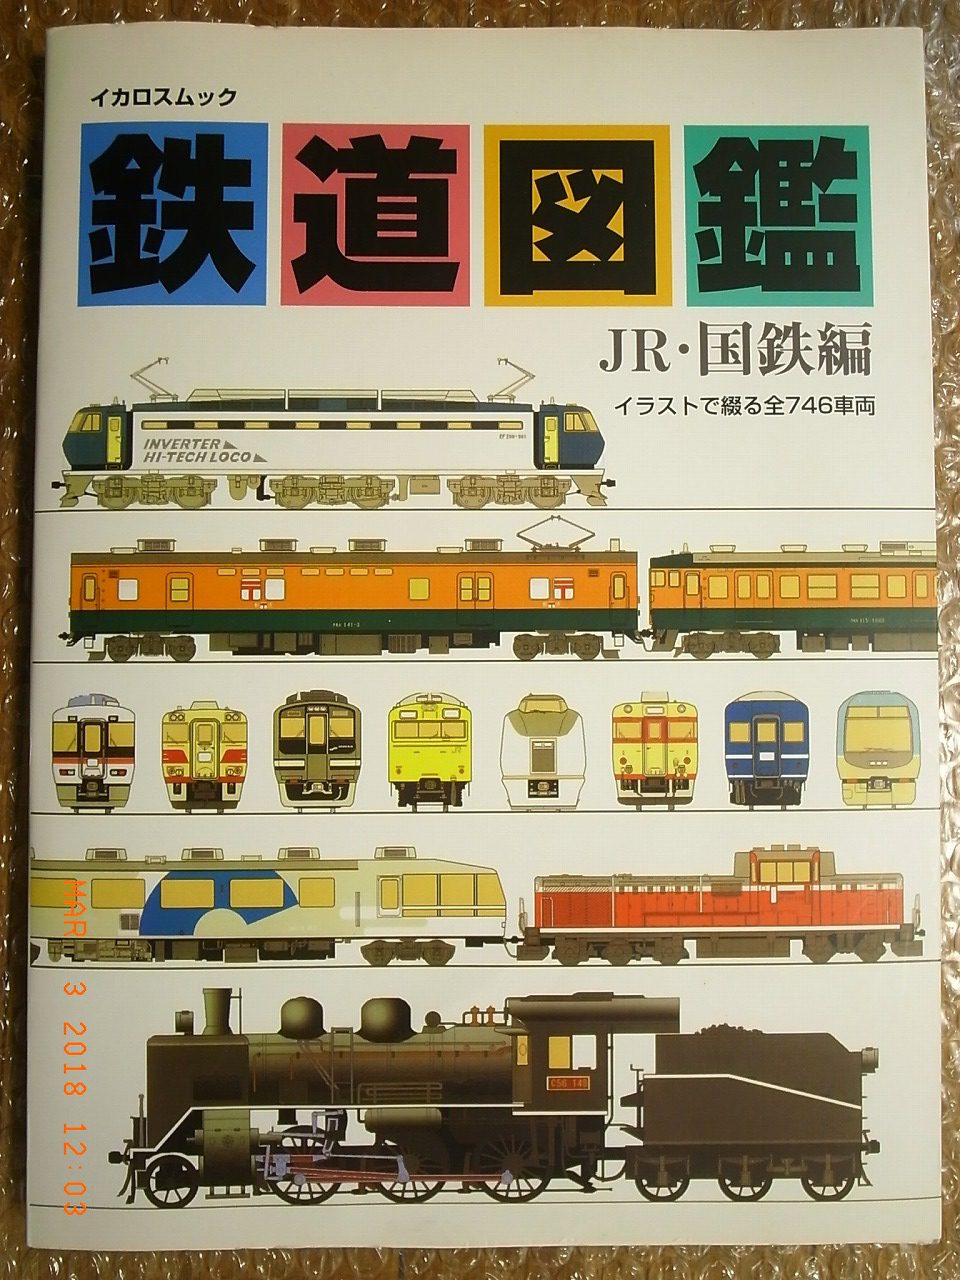 JR/JNR ROLLING STOCKS 1/150 SCALE ILLUSTRATION BOOK, IKAROS 